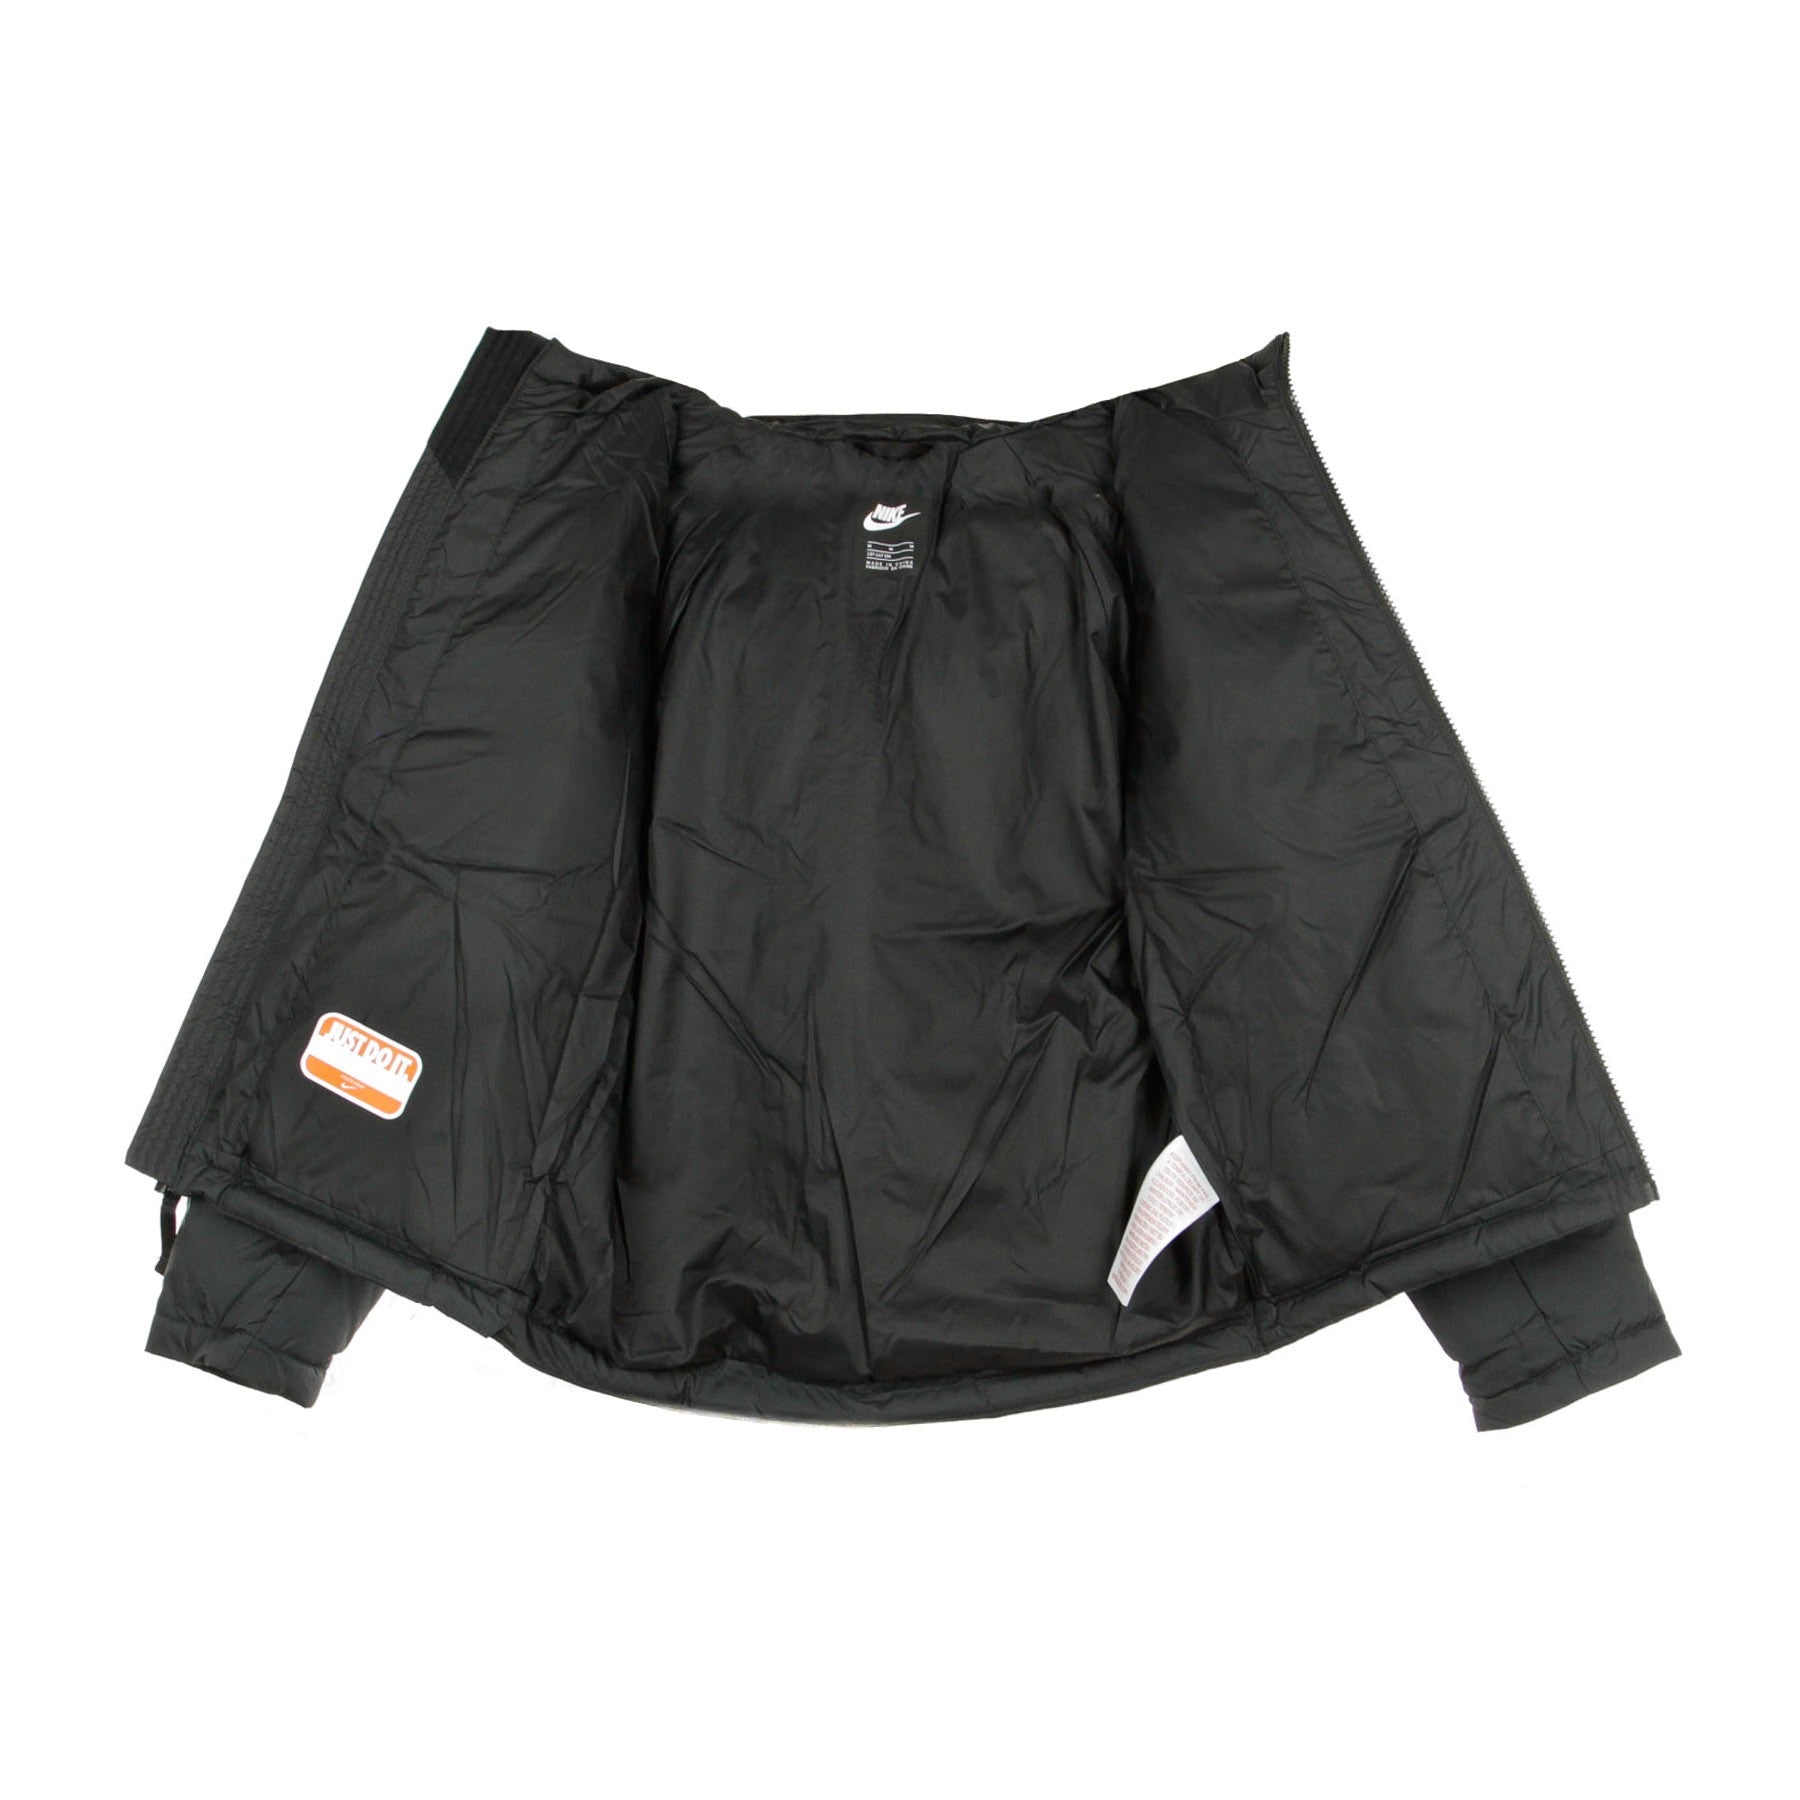 Piumino Ragazza Sportswear Synthetic Fill Jacket Black/black/black/white CU9157